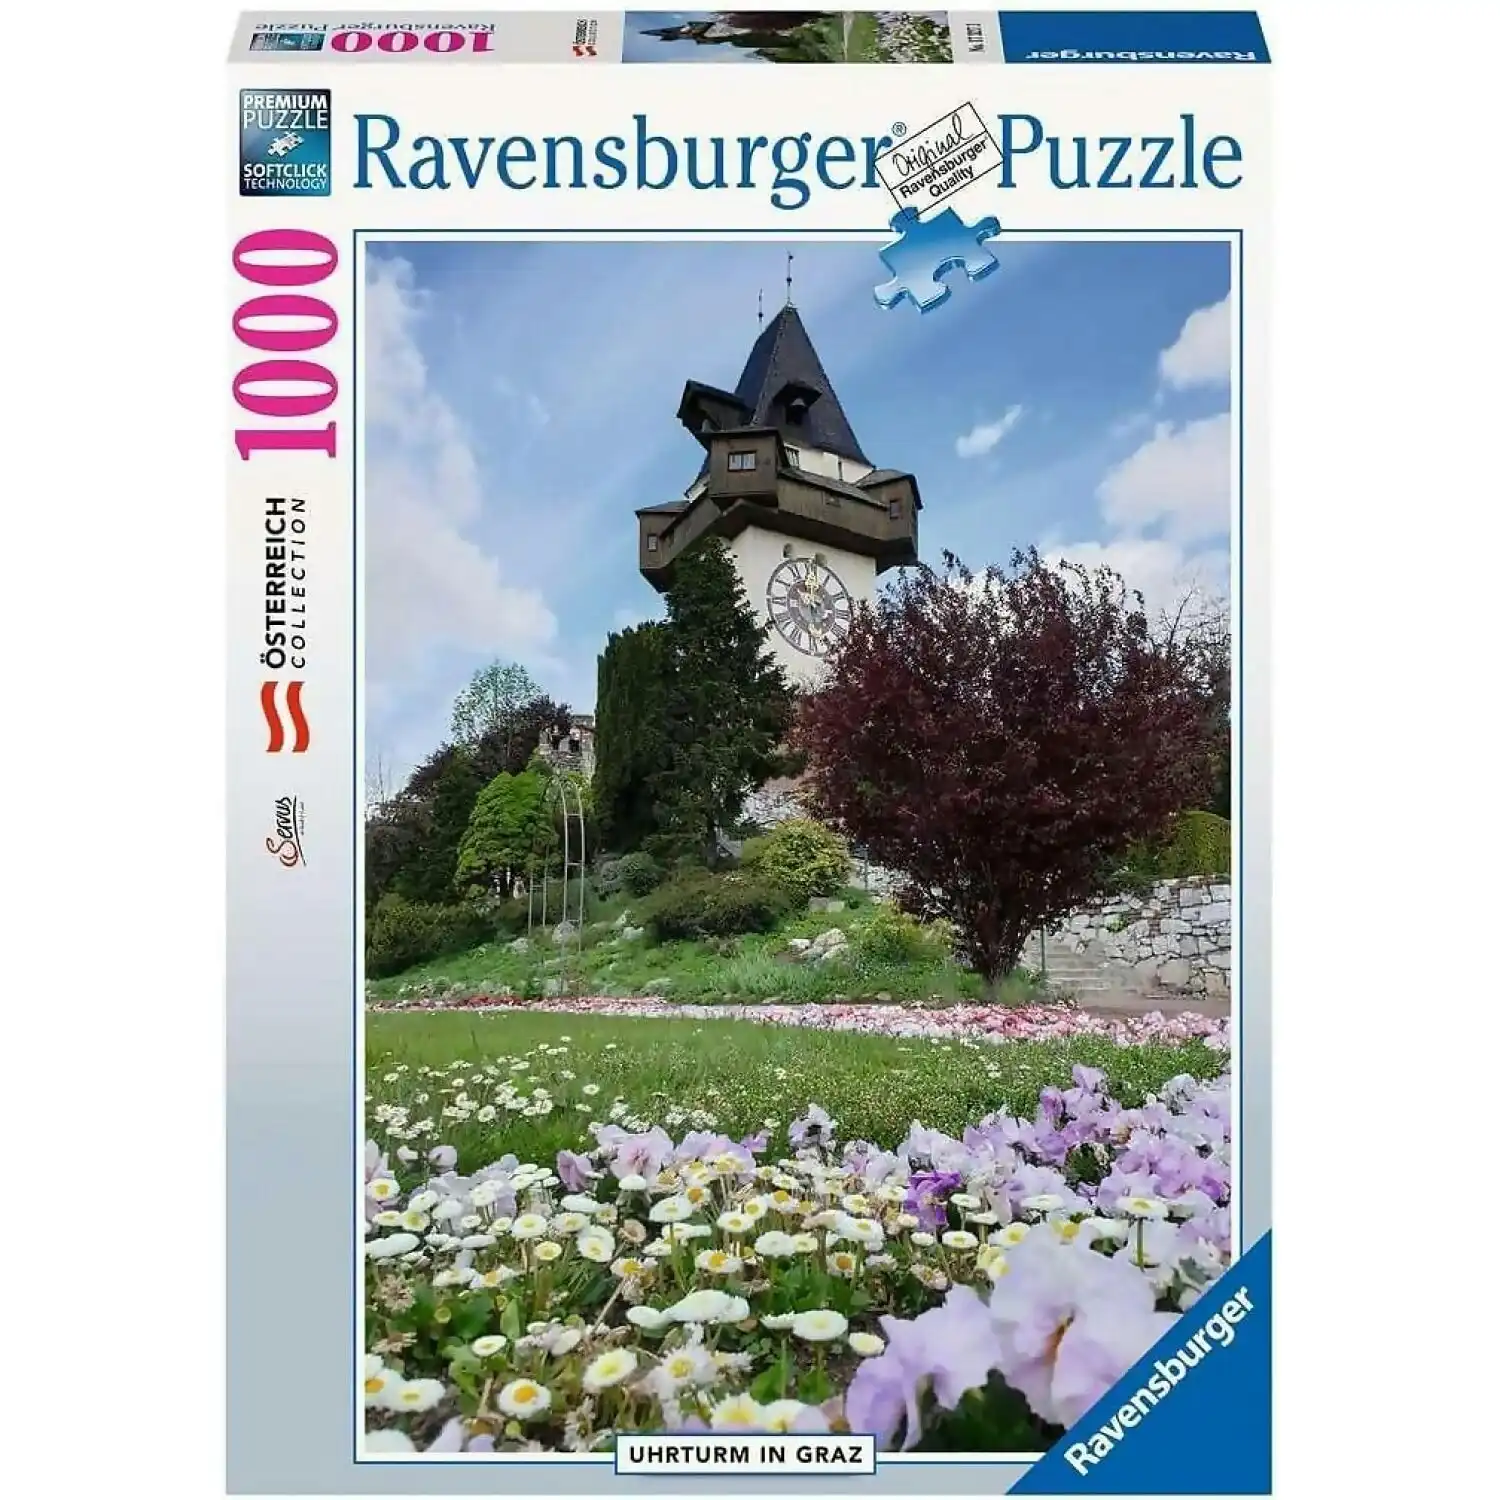 Ravensburger - Uhrturm In Graz Jigsaw Puzzle 1000pc